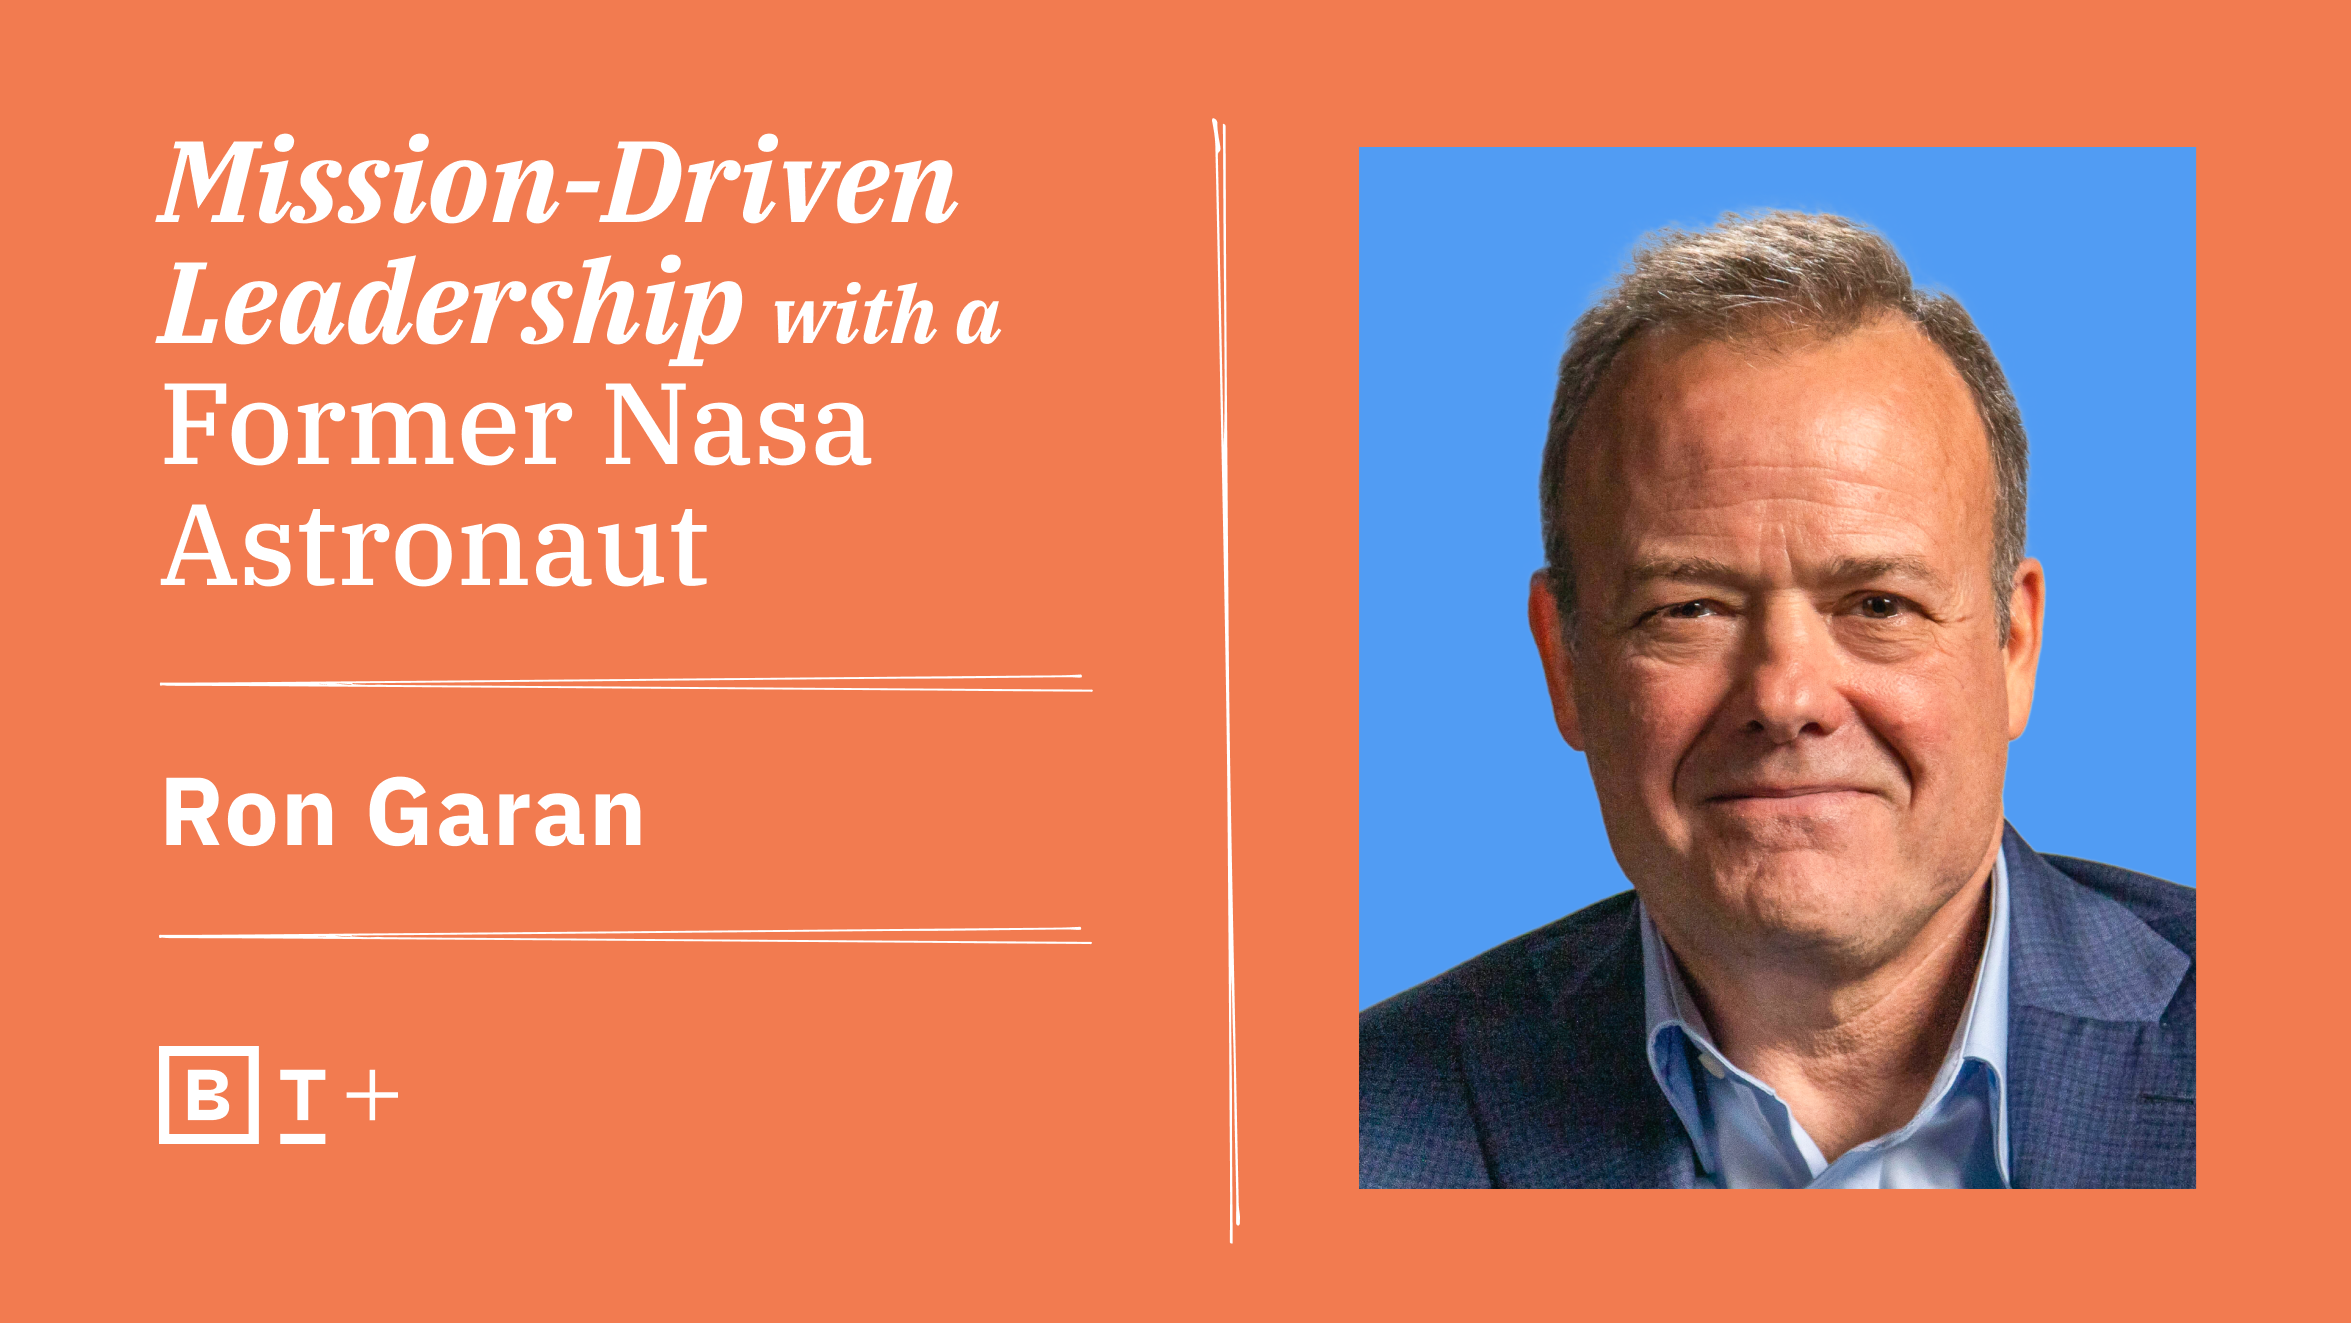 Mission driven leadership with former nasa astronaut ron garan.